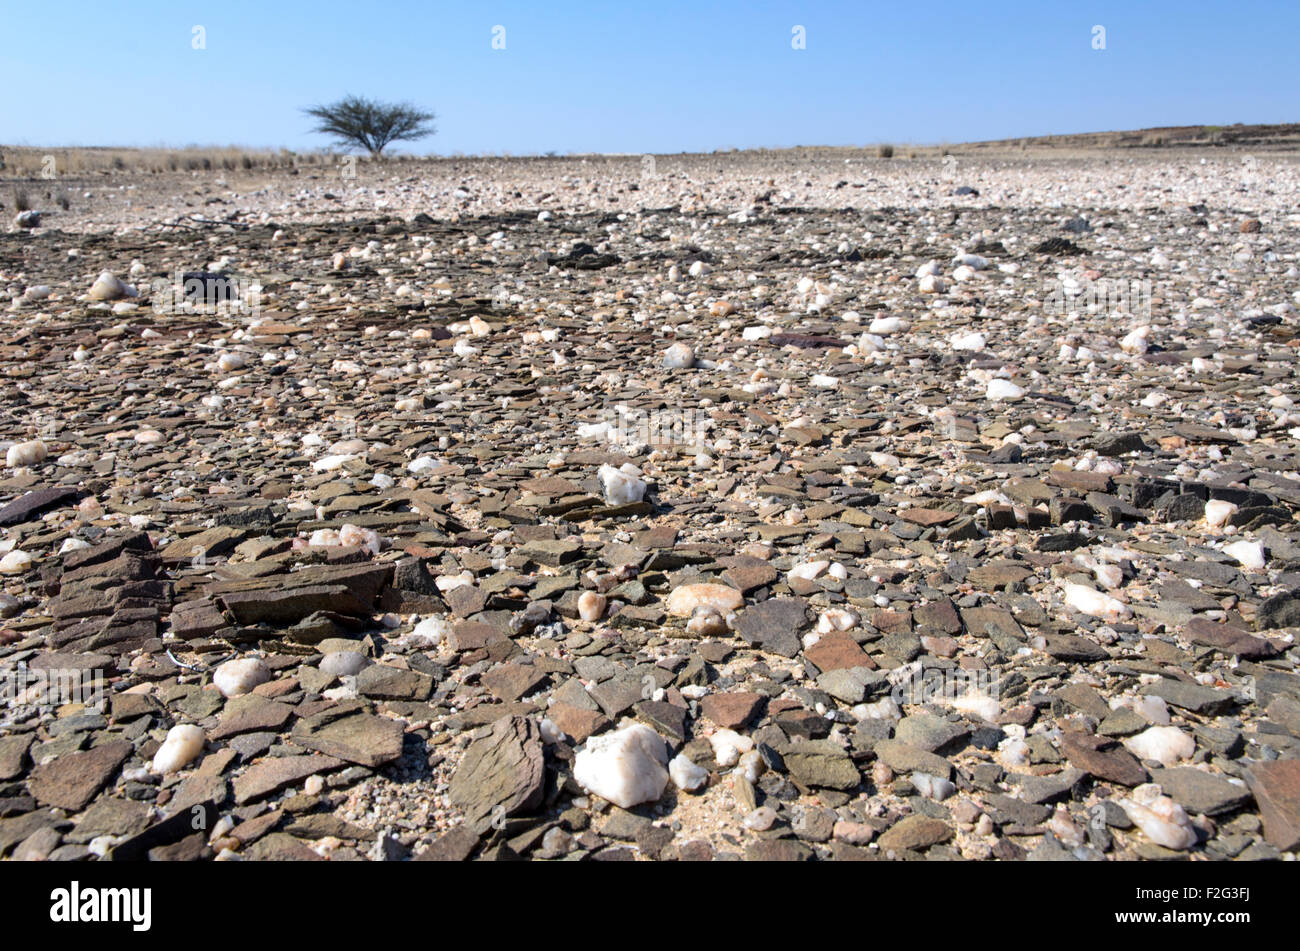 The Messum river area of Damaraland, Namibia Stock Photo